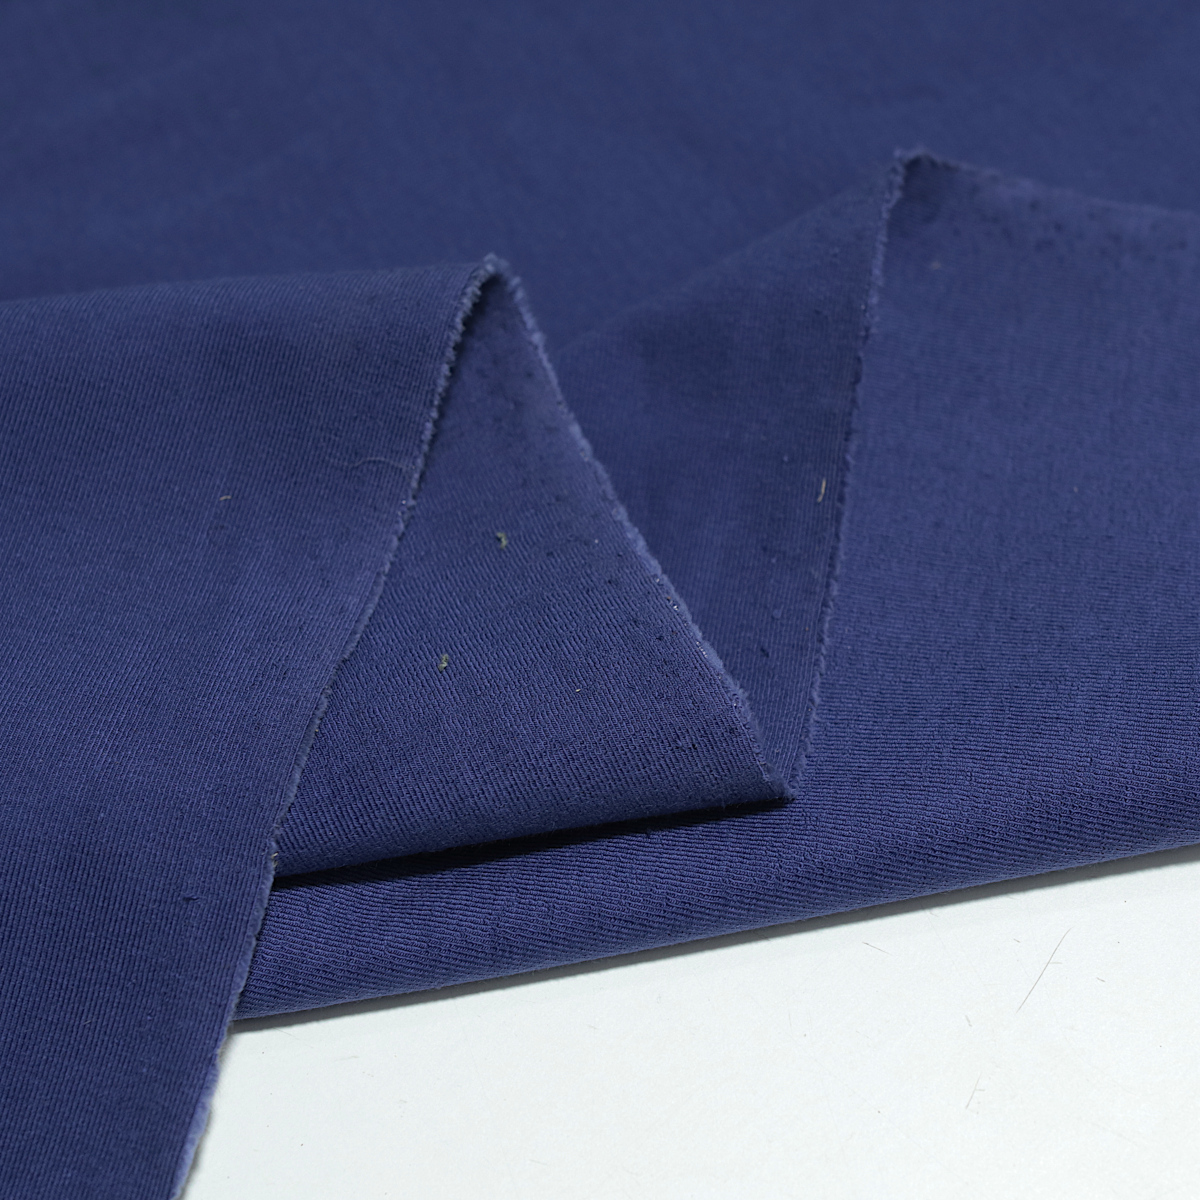 Robuster elastischer Polyester Jersey in Blau Meterware als Bekleidungsstoff